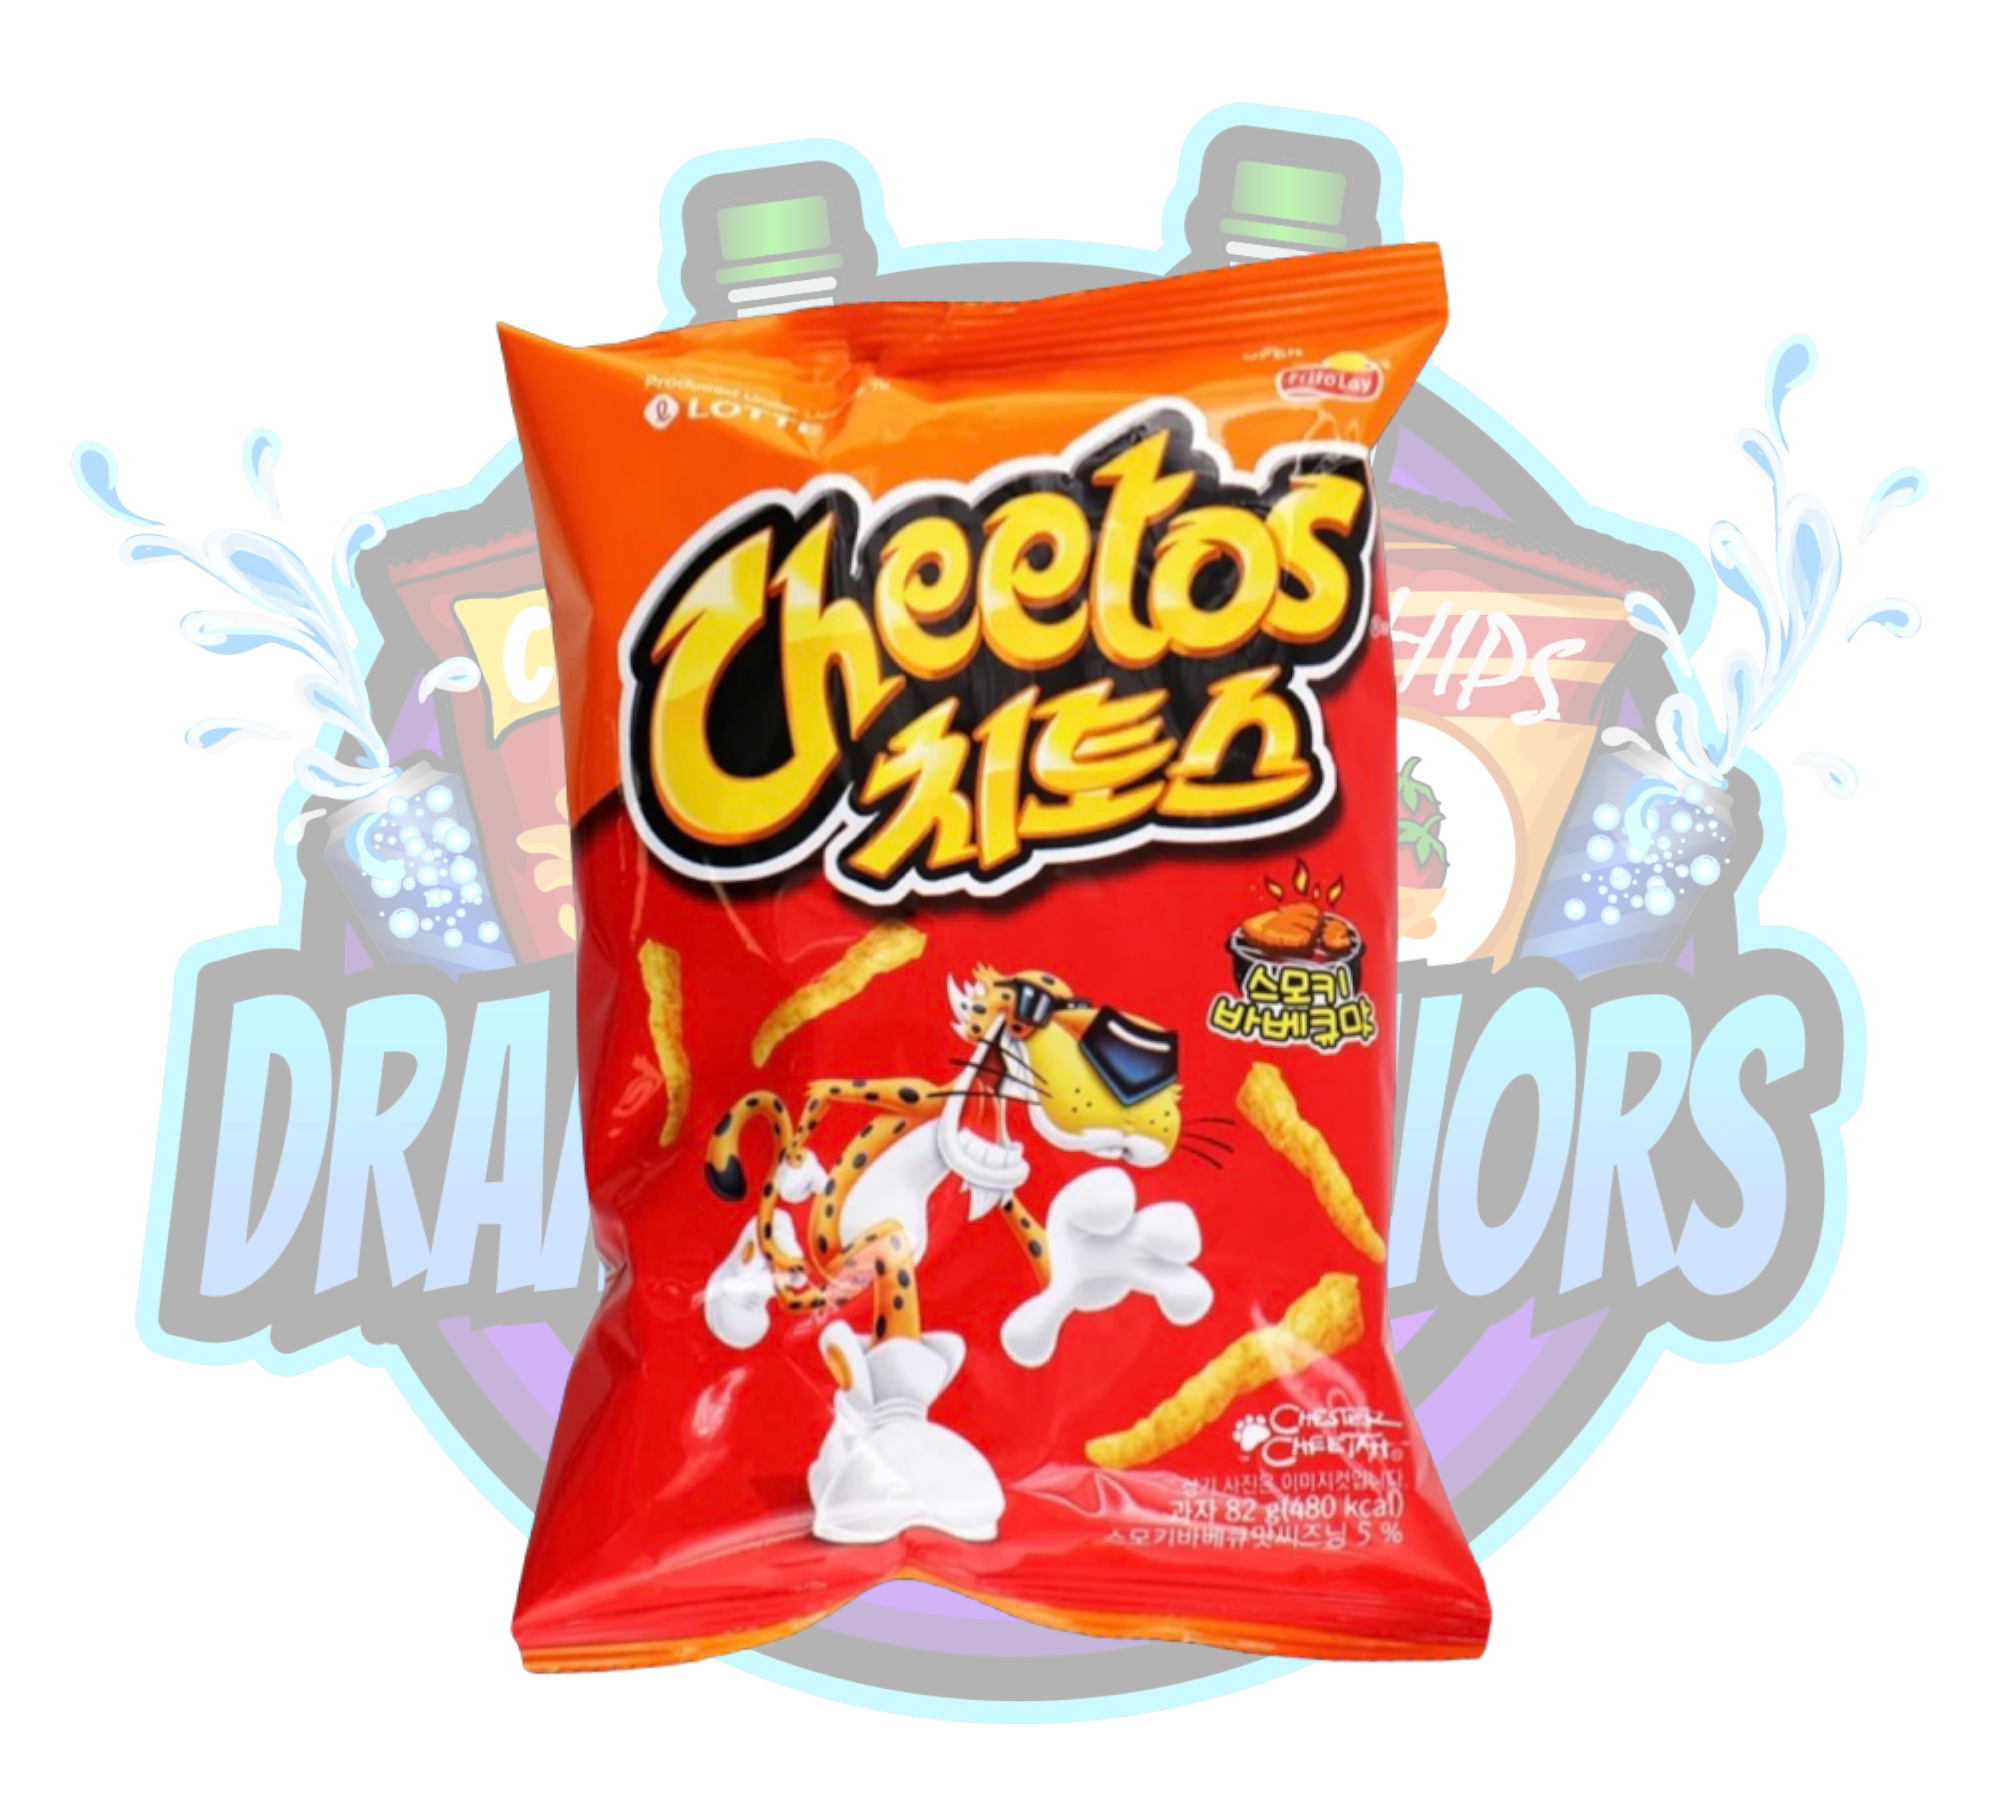 Cheetos Cheese BBQ - 75g - Danmad